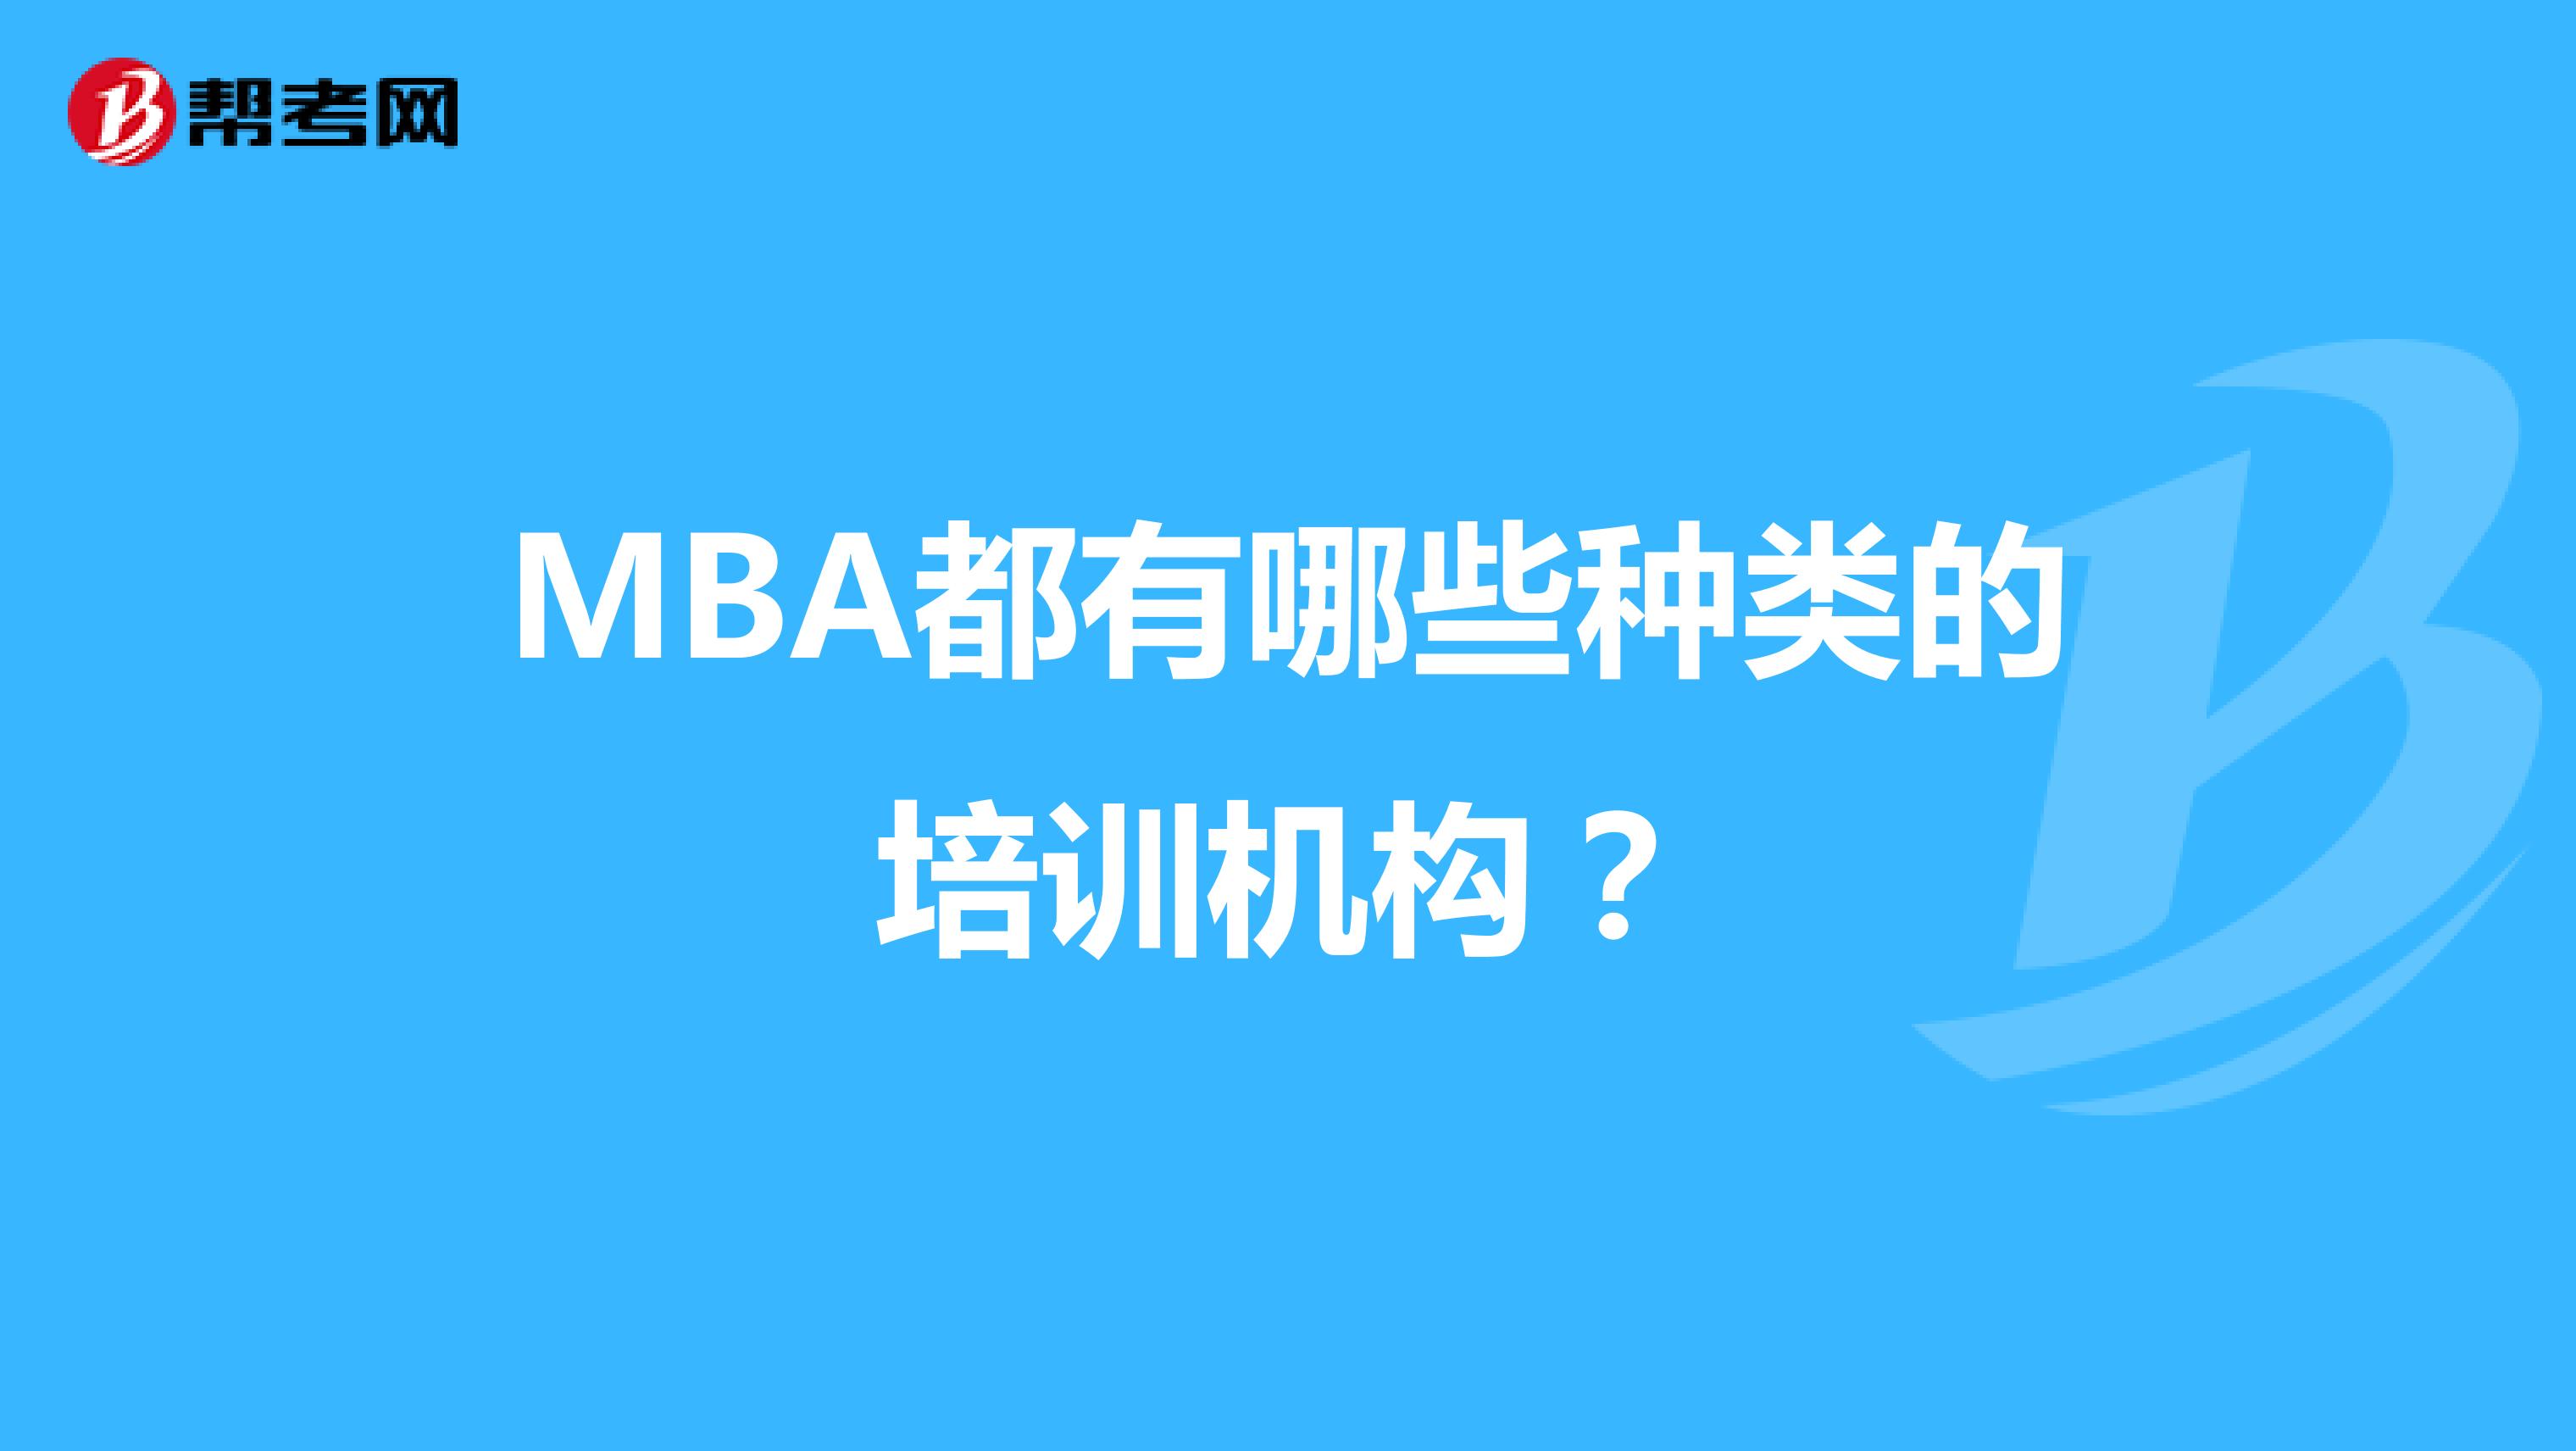 MBA都有哪些种类的培训机构？